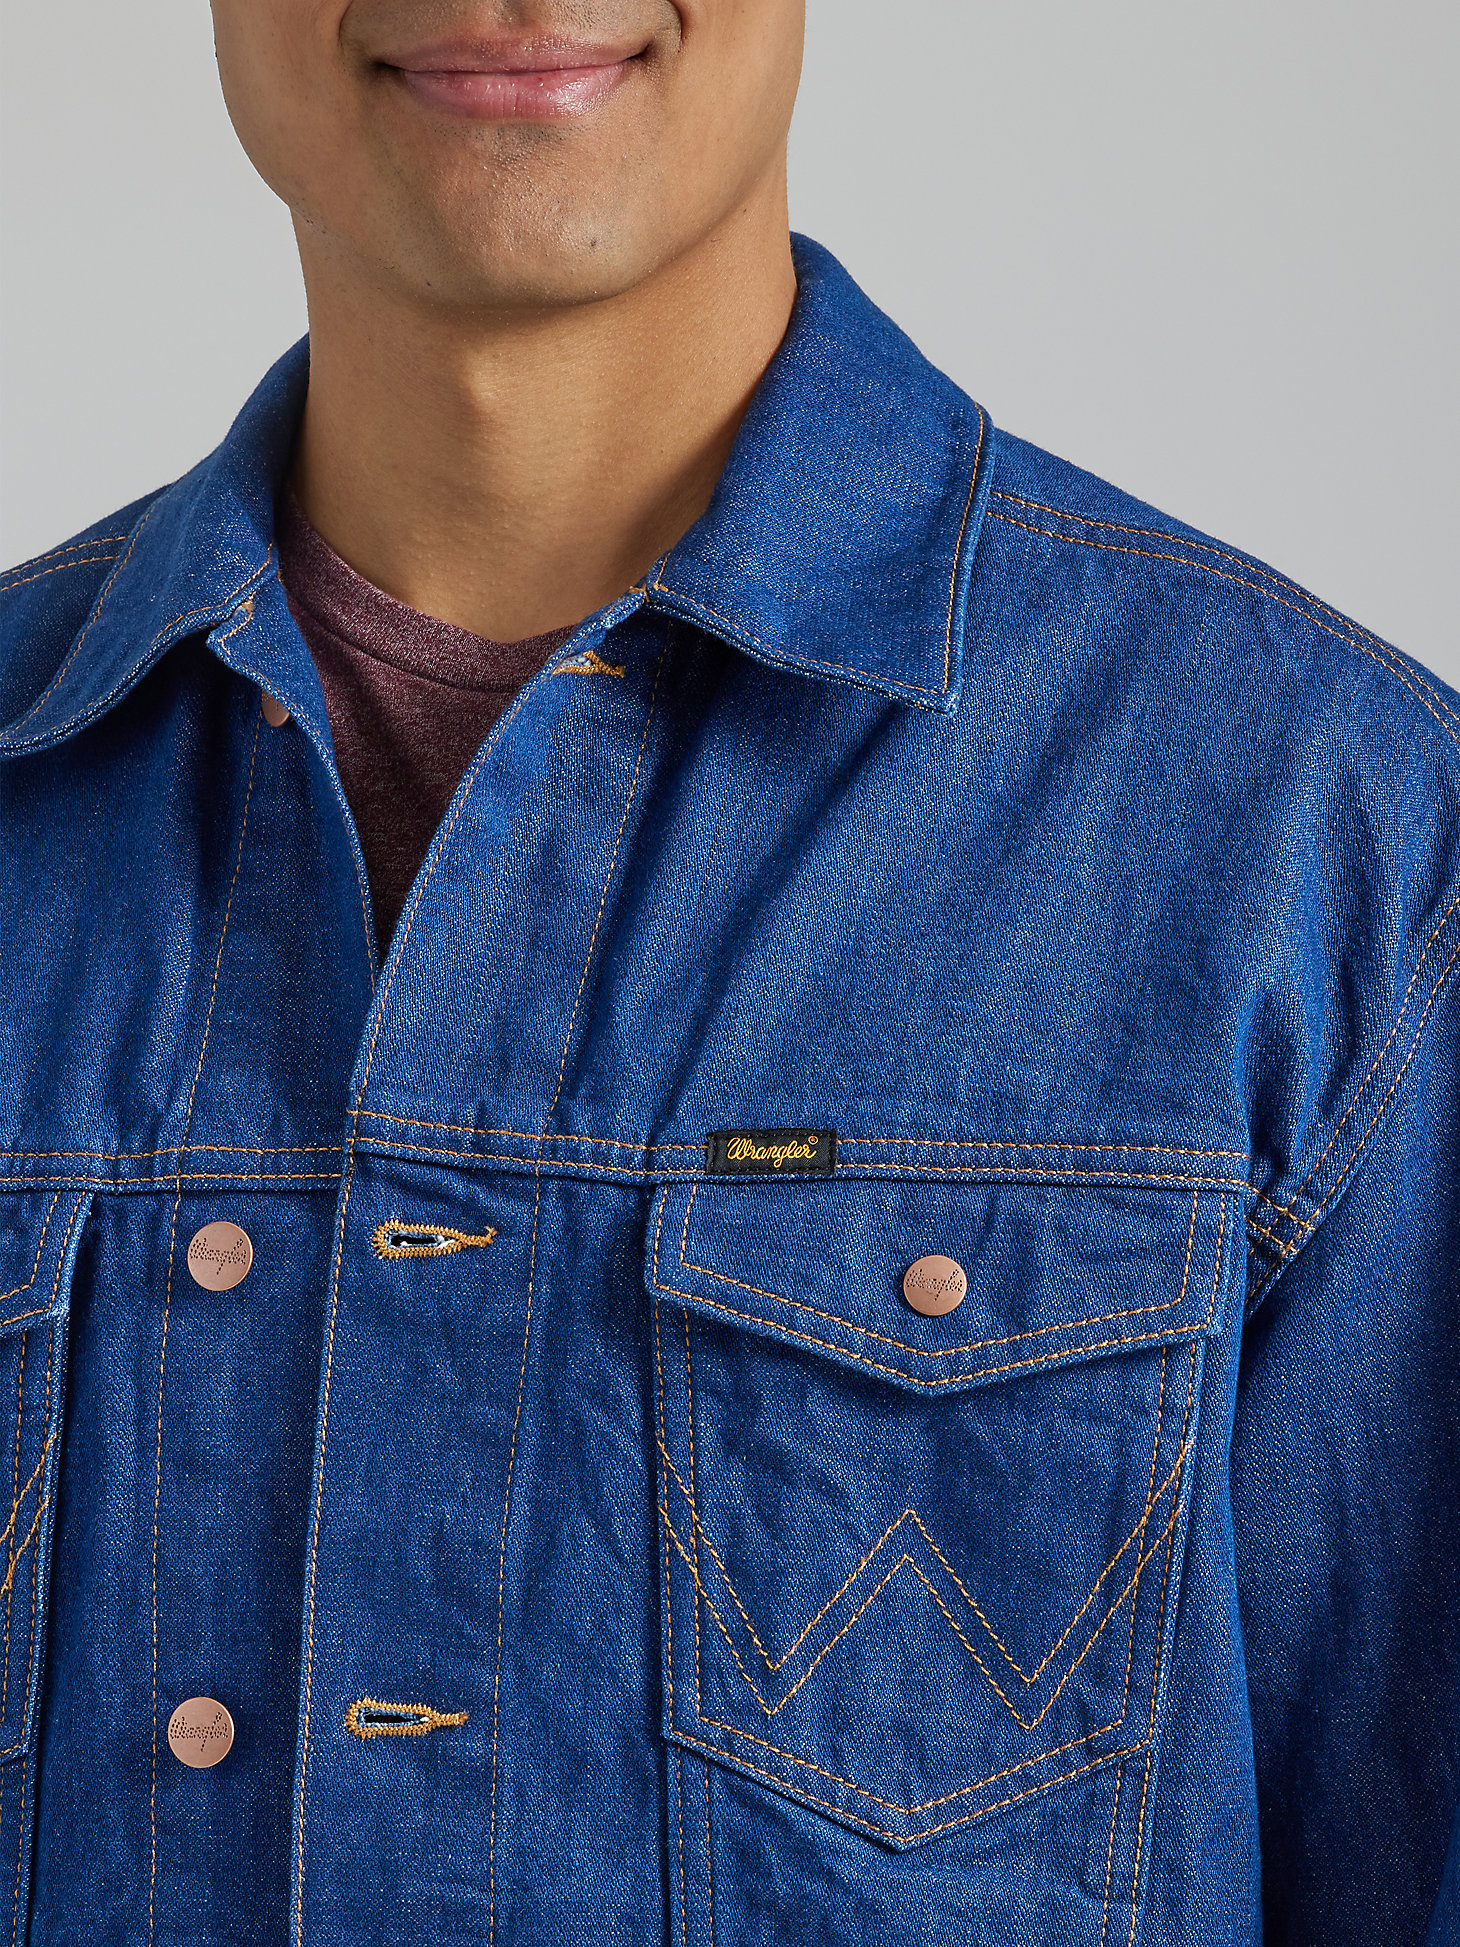 Men's Heritage Anti-Fit Jacket in Wrangler Blue alternative view 3